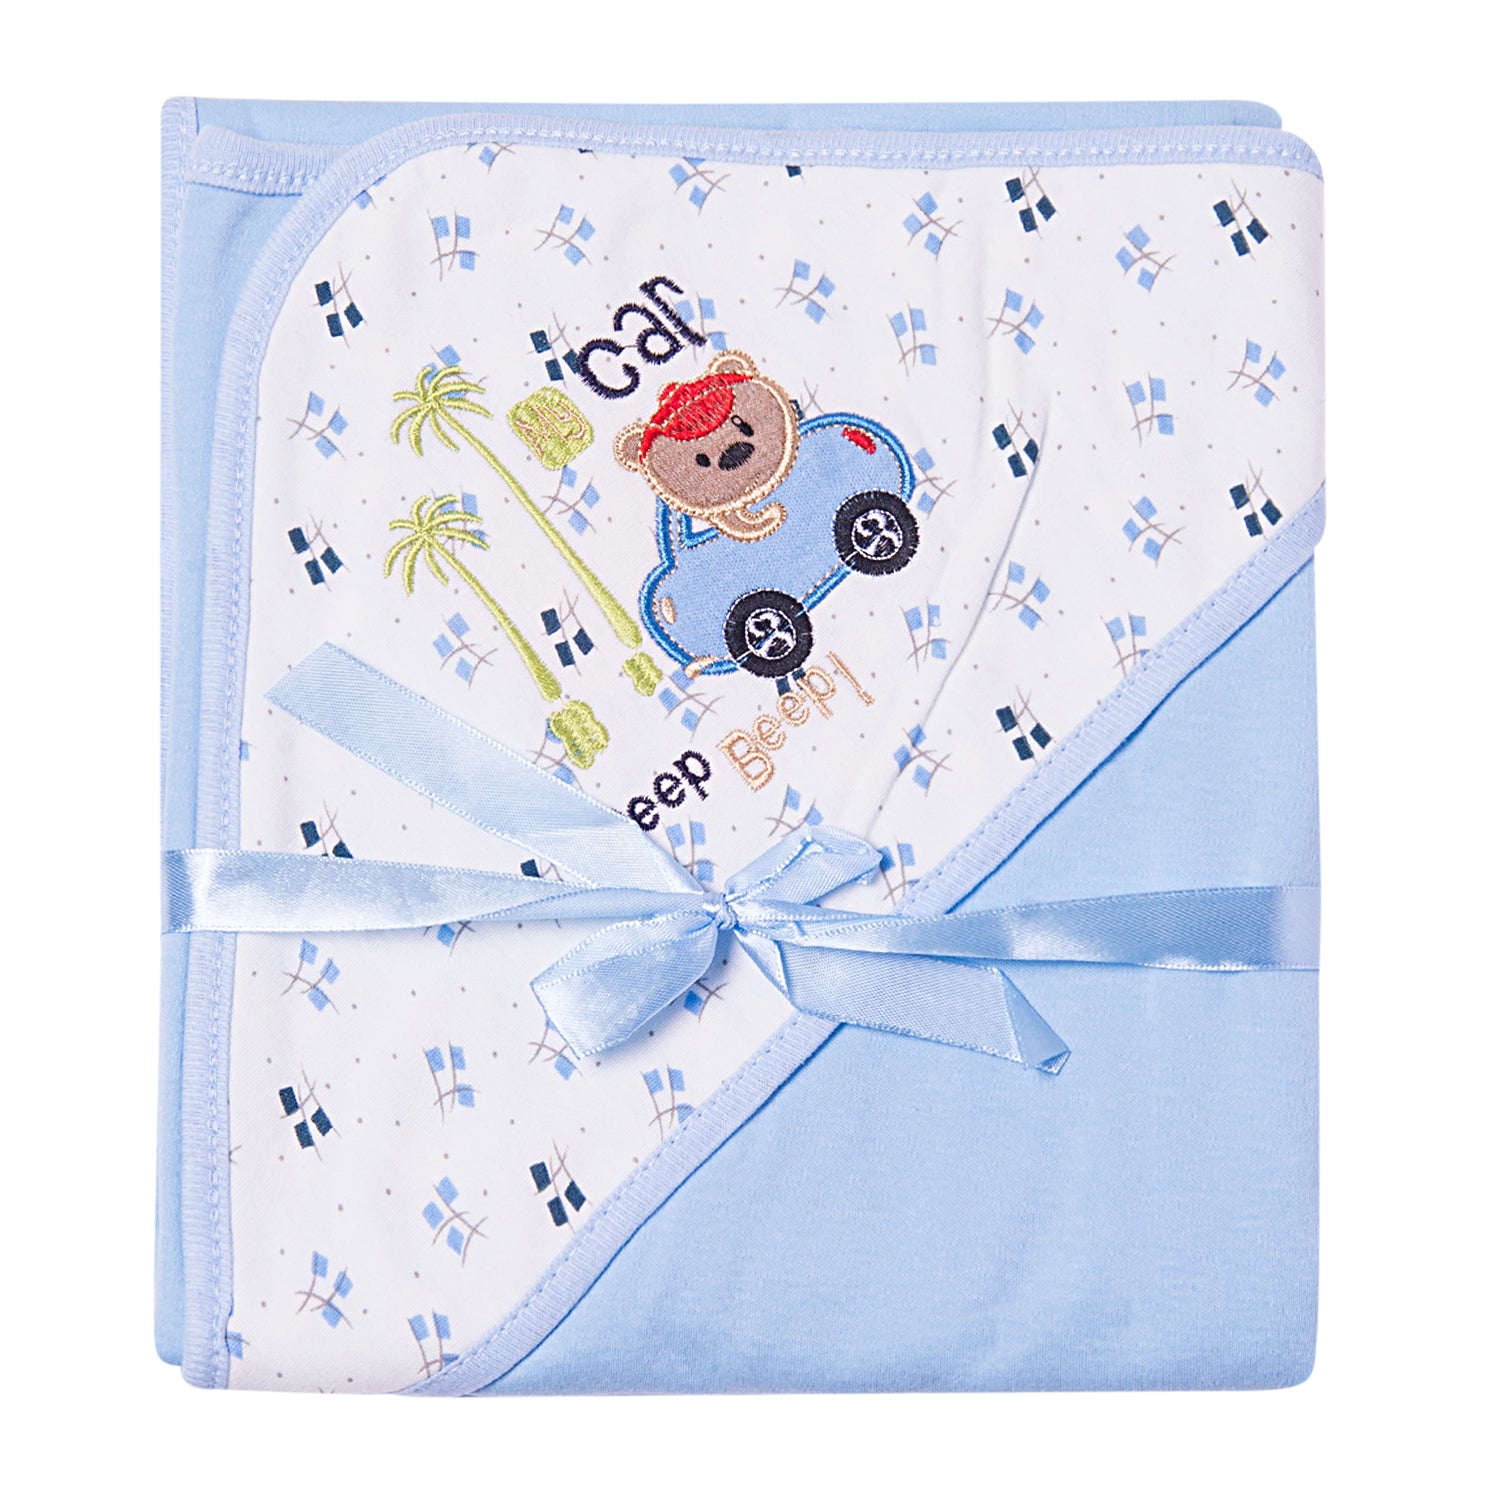 Premium Car Themed Unisex Gift Hamper 0-18 M - Baby Moo